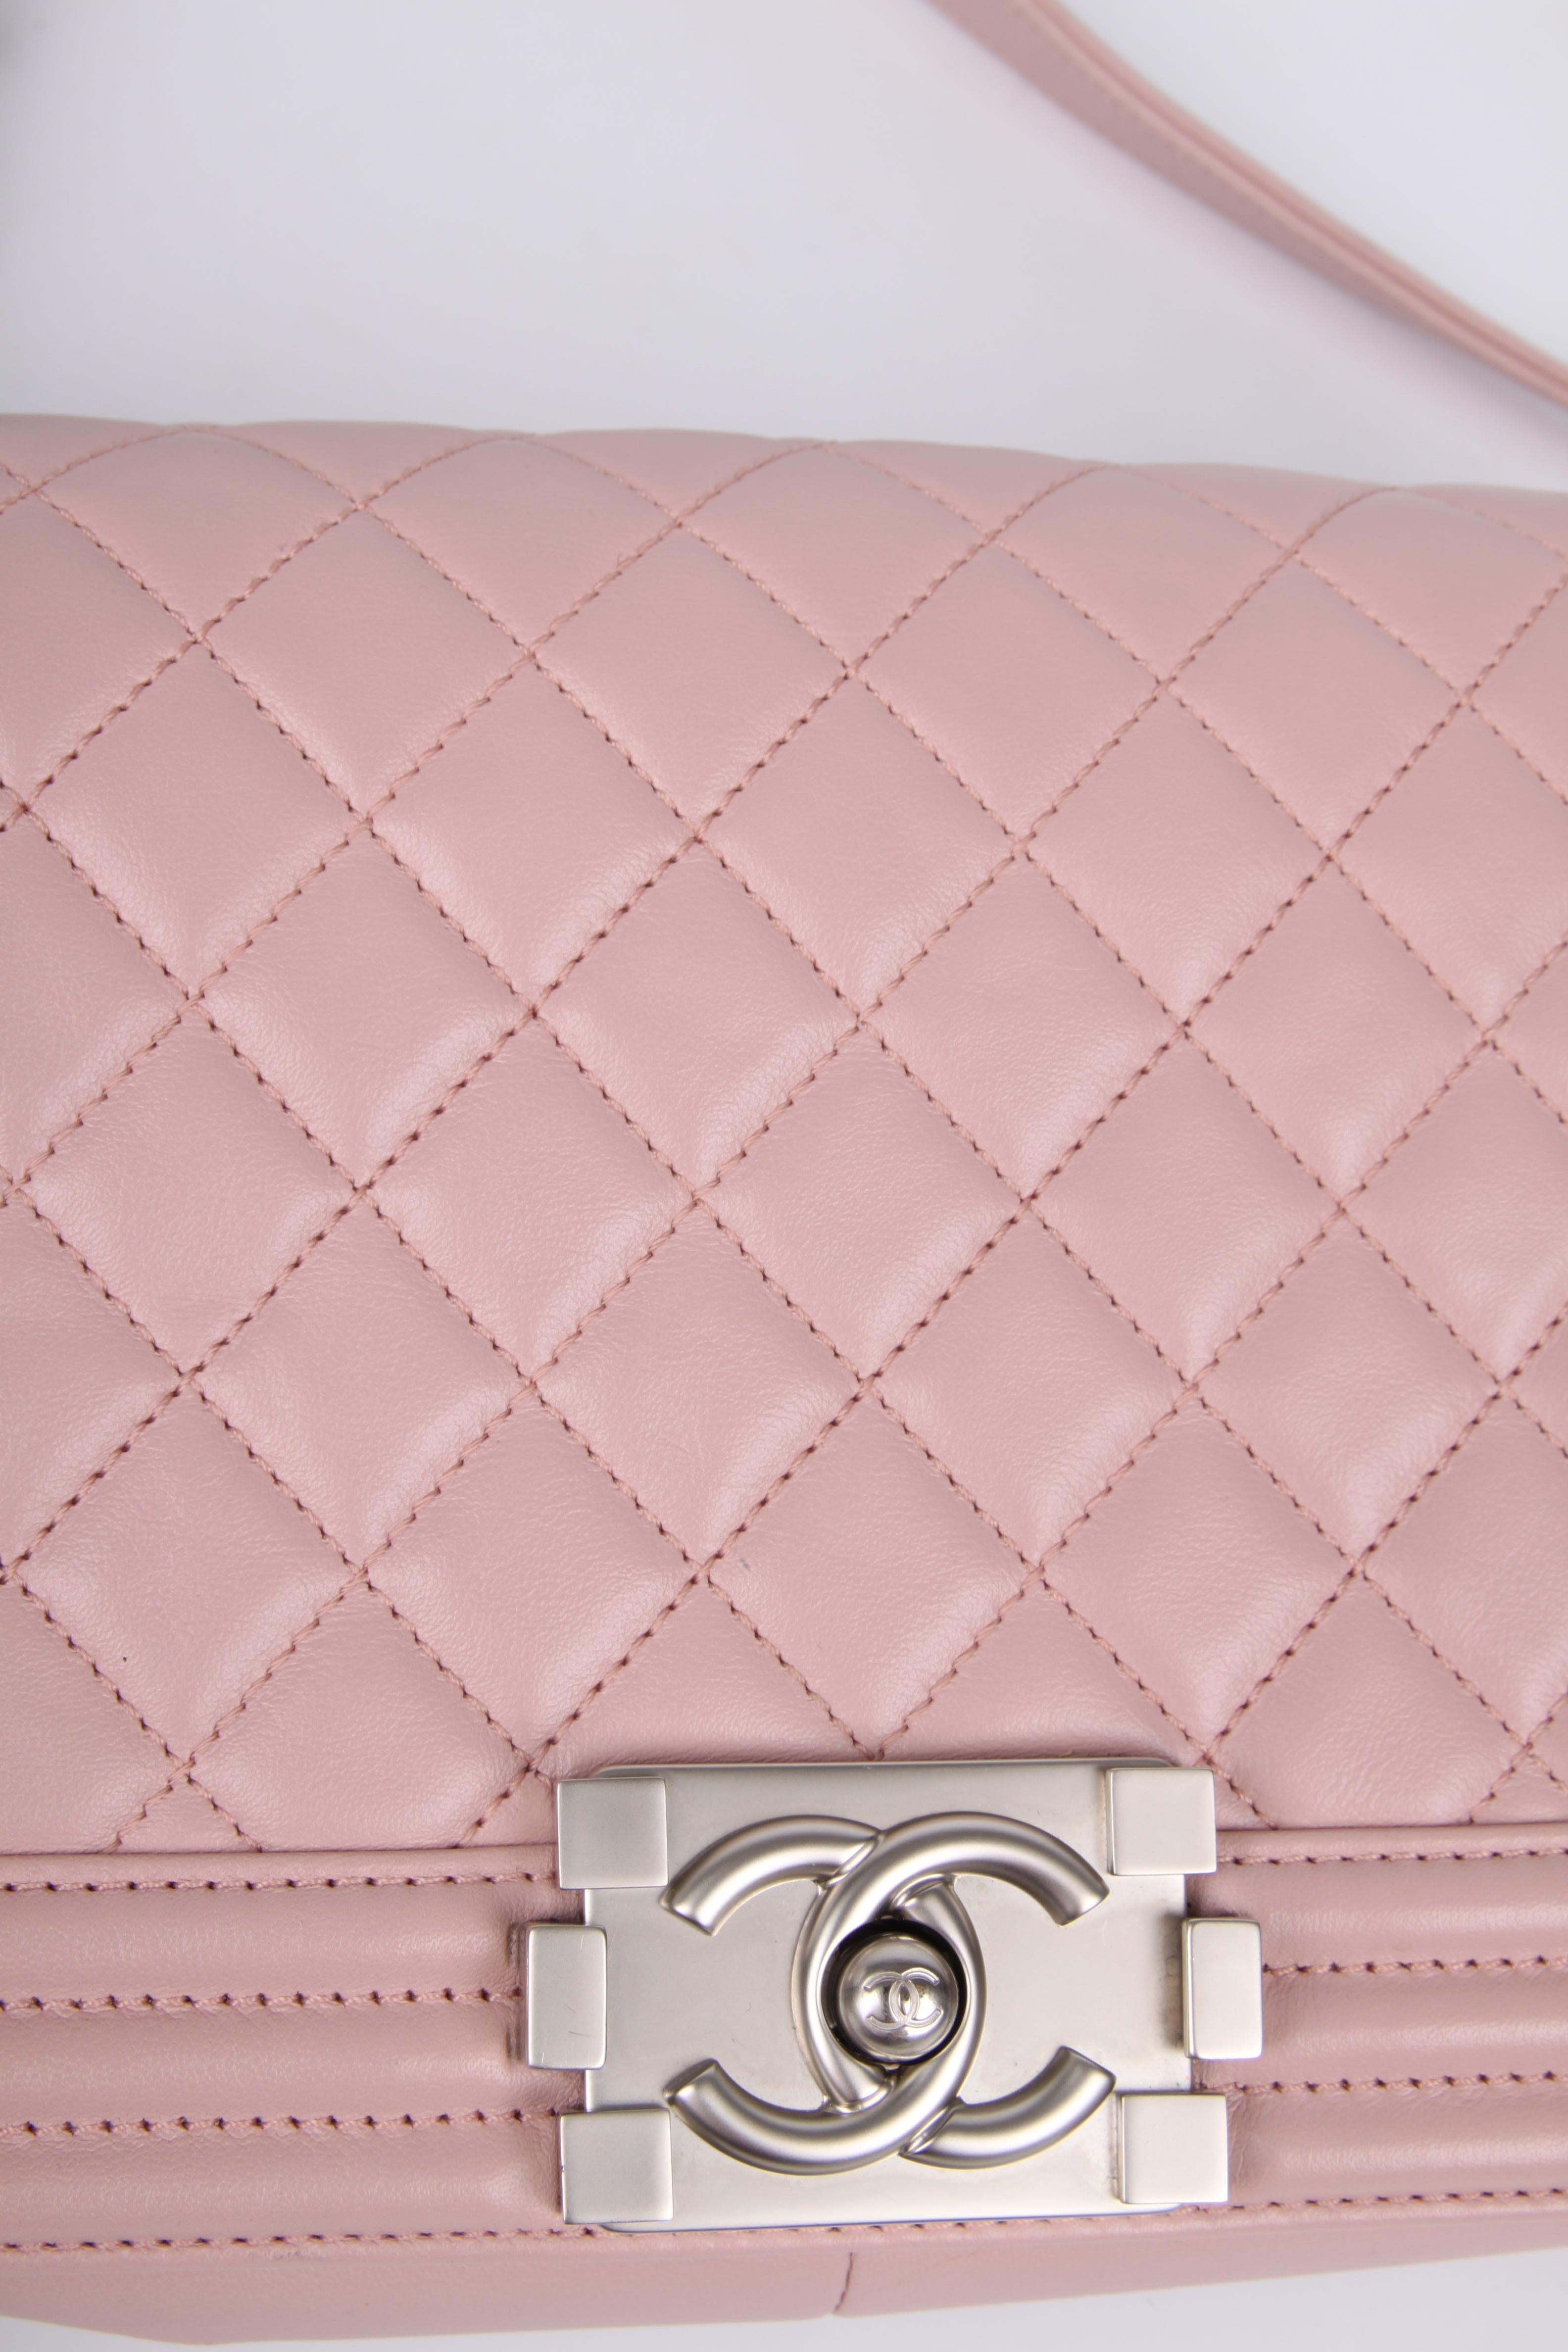 Beige Chanel Le Boy Bag Medium - dusty pale pink For Sale